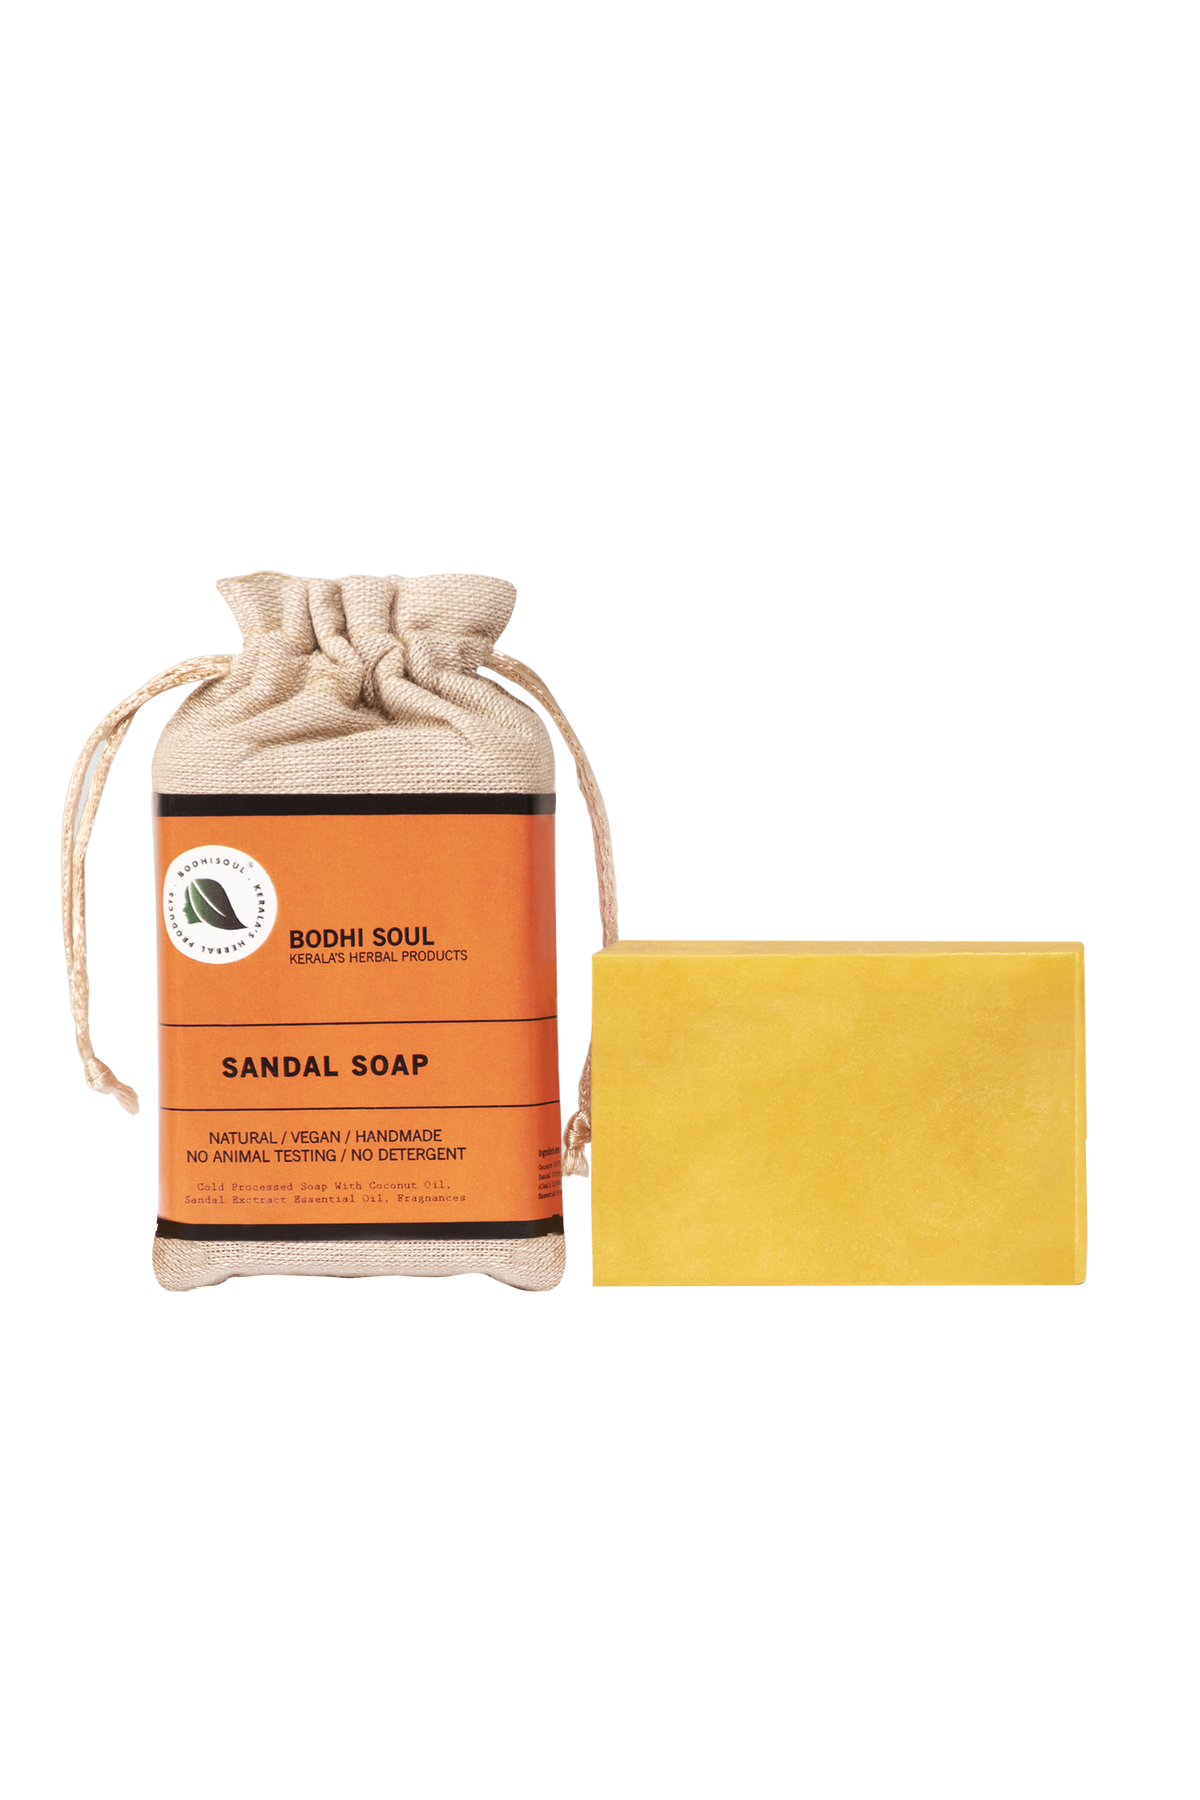  Bodhisoul Sandal Soap